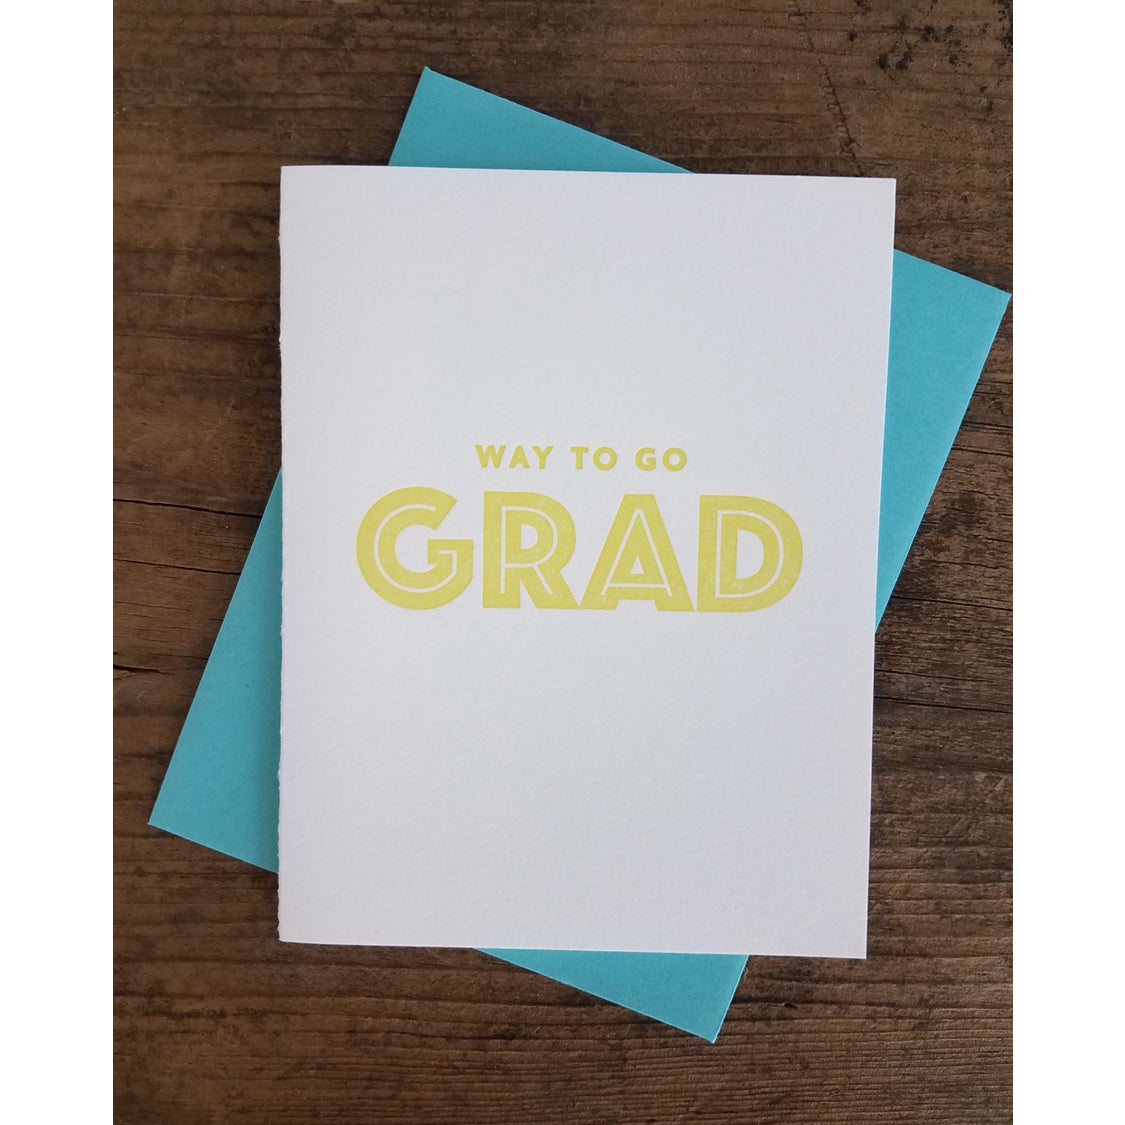 Way to Go Grad Letterpress Card